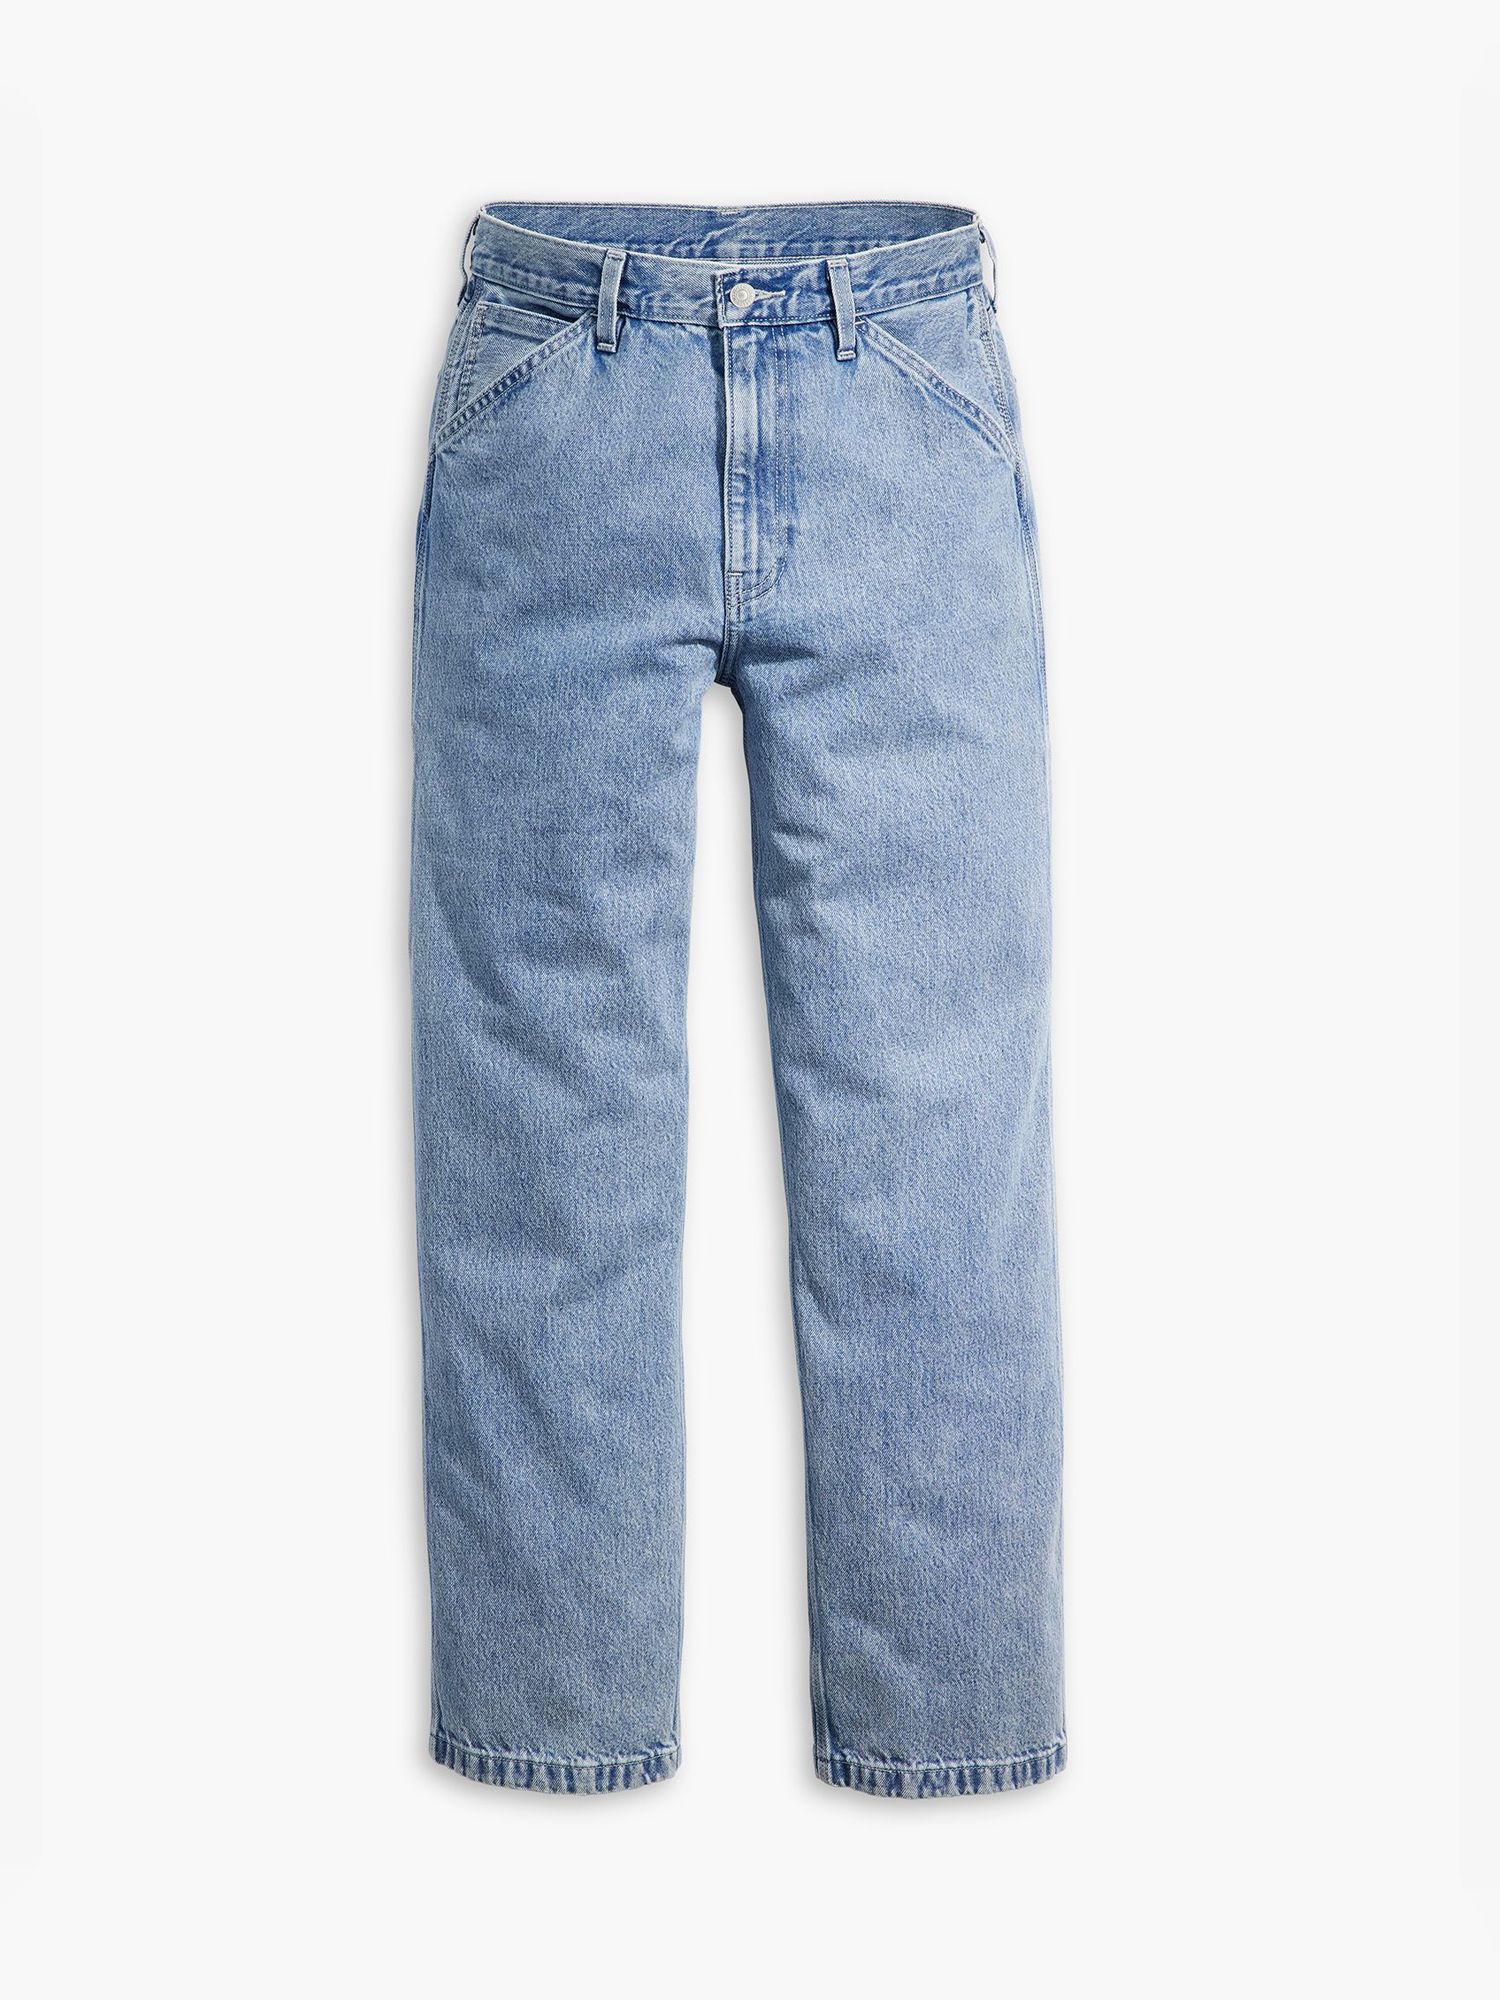 Levi's 568 Loose Carpenter Jeans, Light Blue, 32R